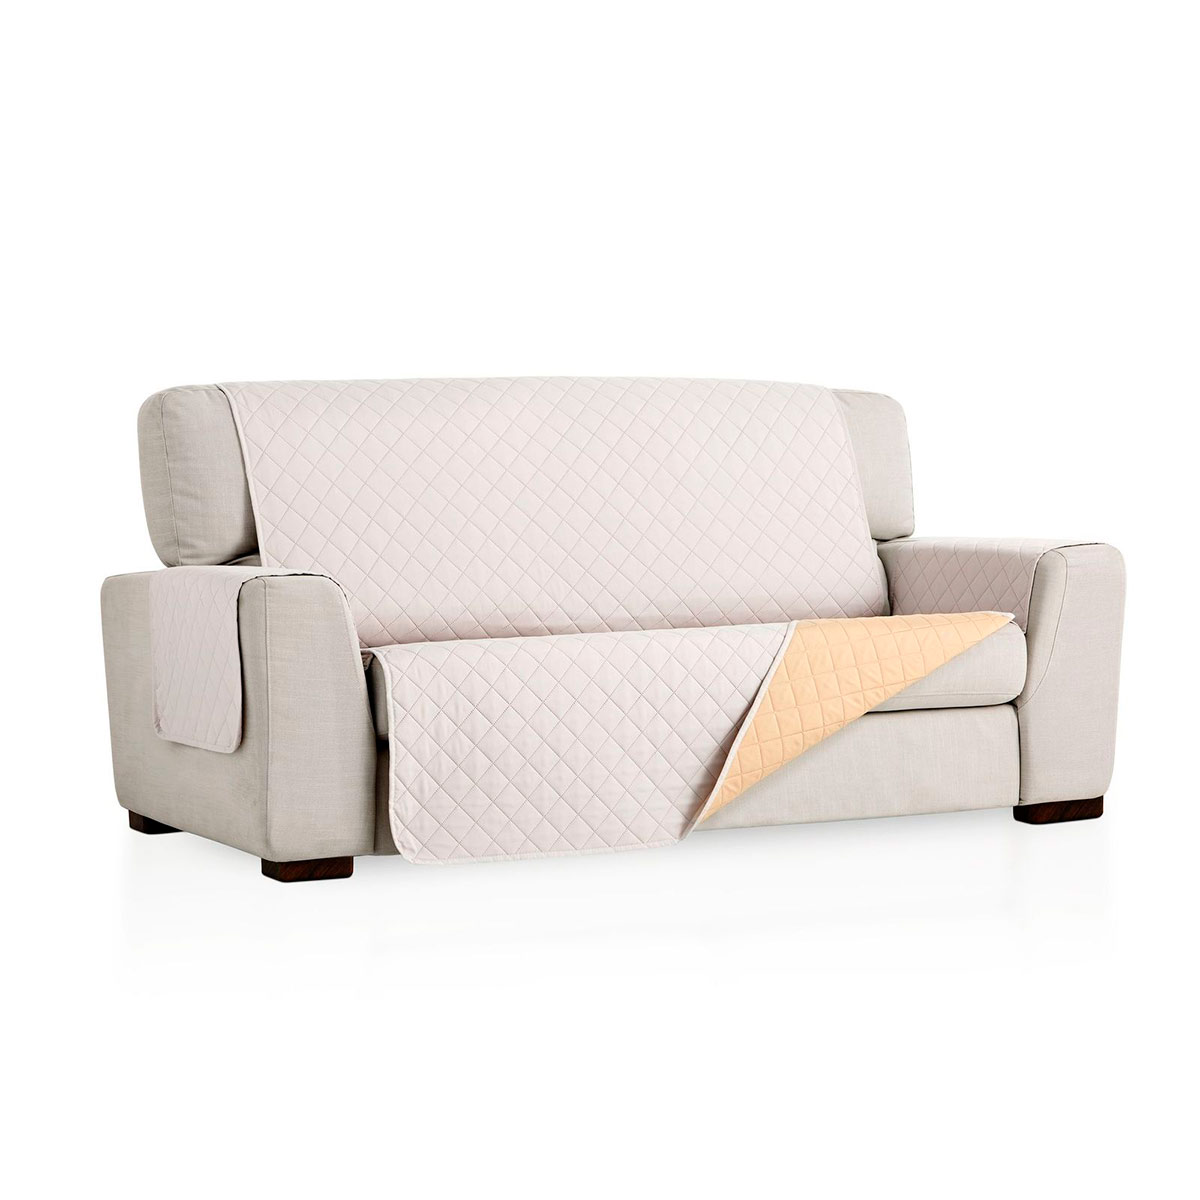 Cubre sofa Marfil fondo blanco